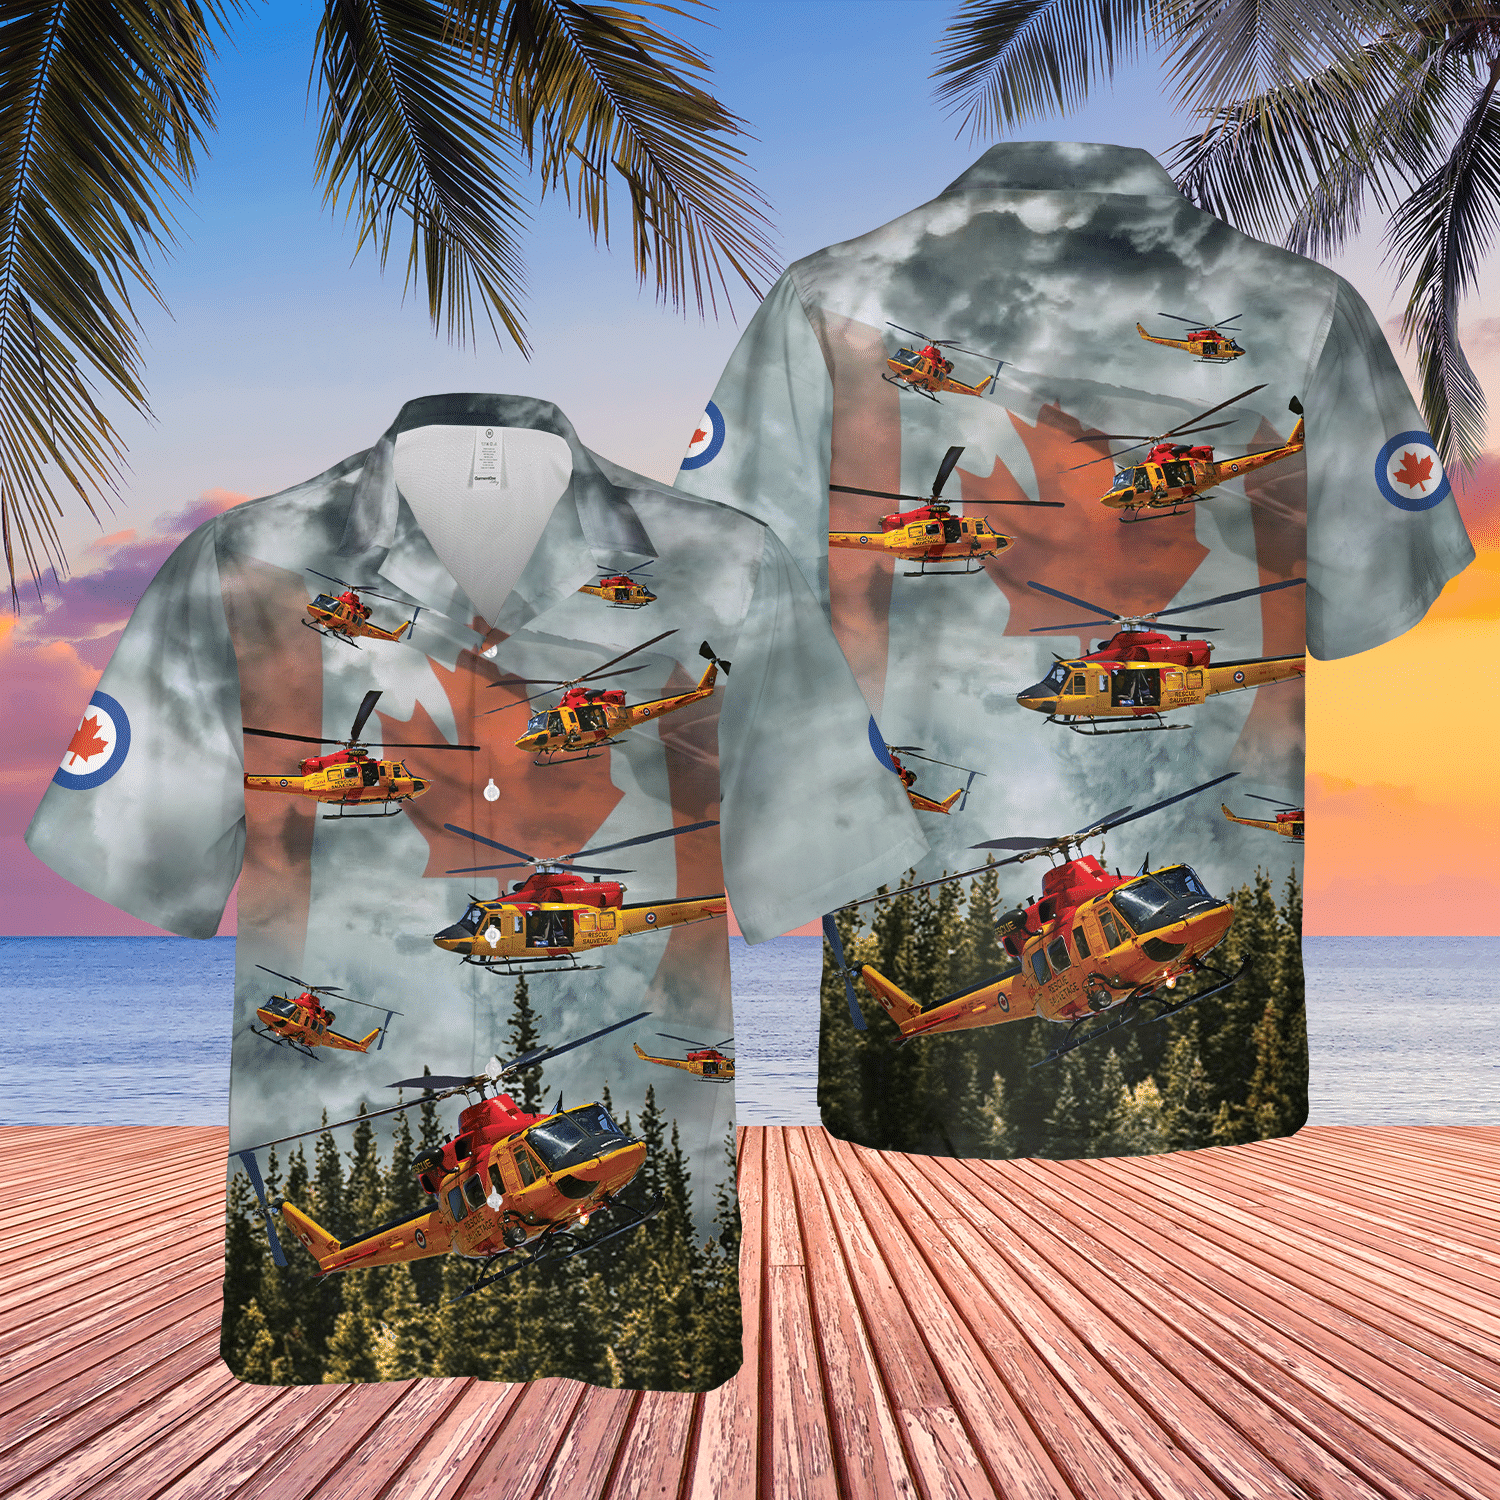 Enjoy your summer with top cool hawaiian shirt below 99